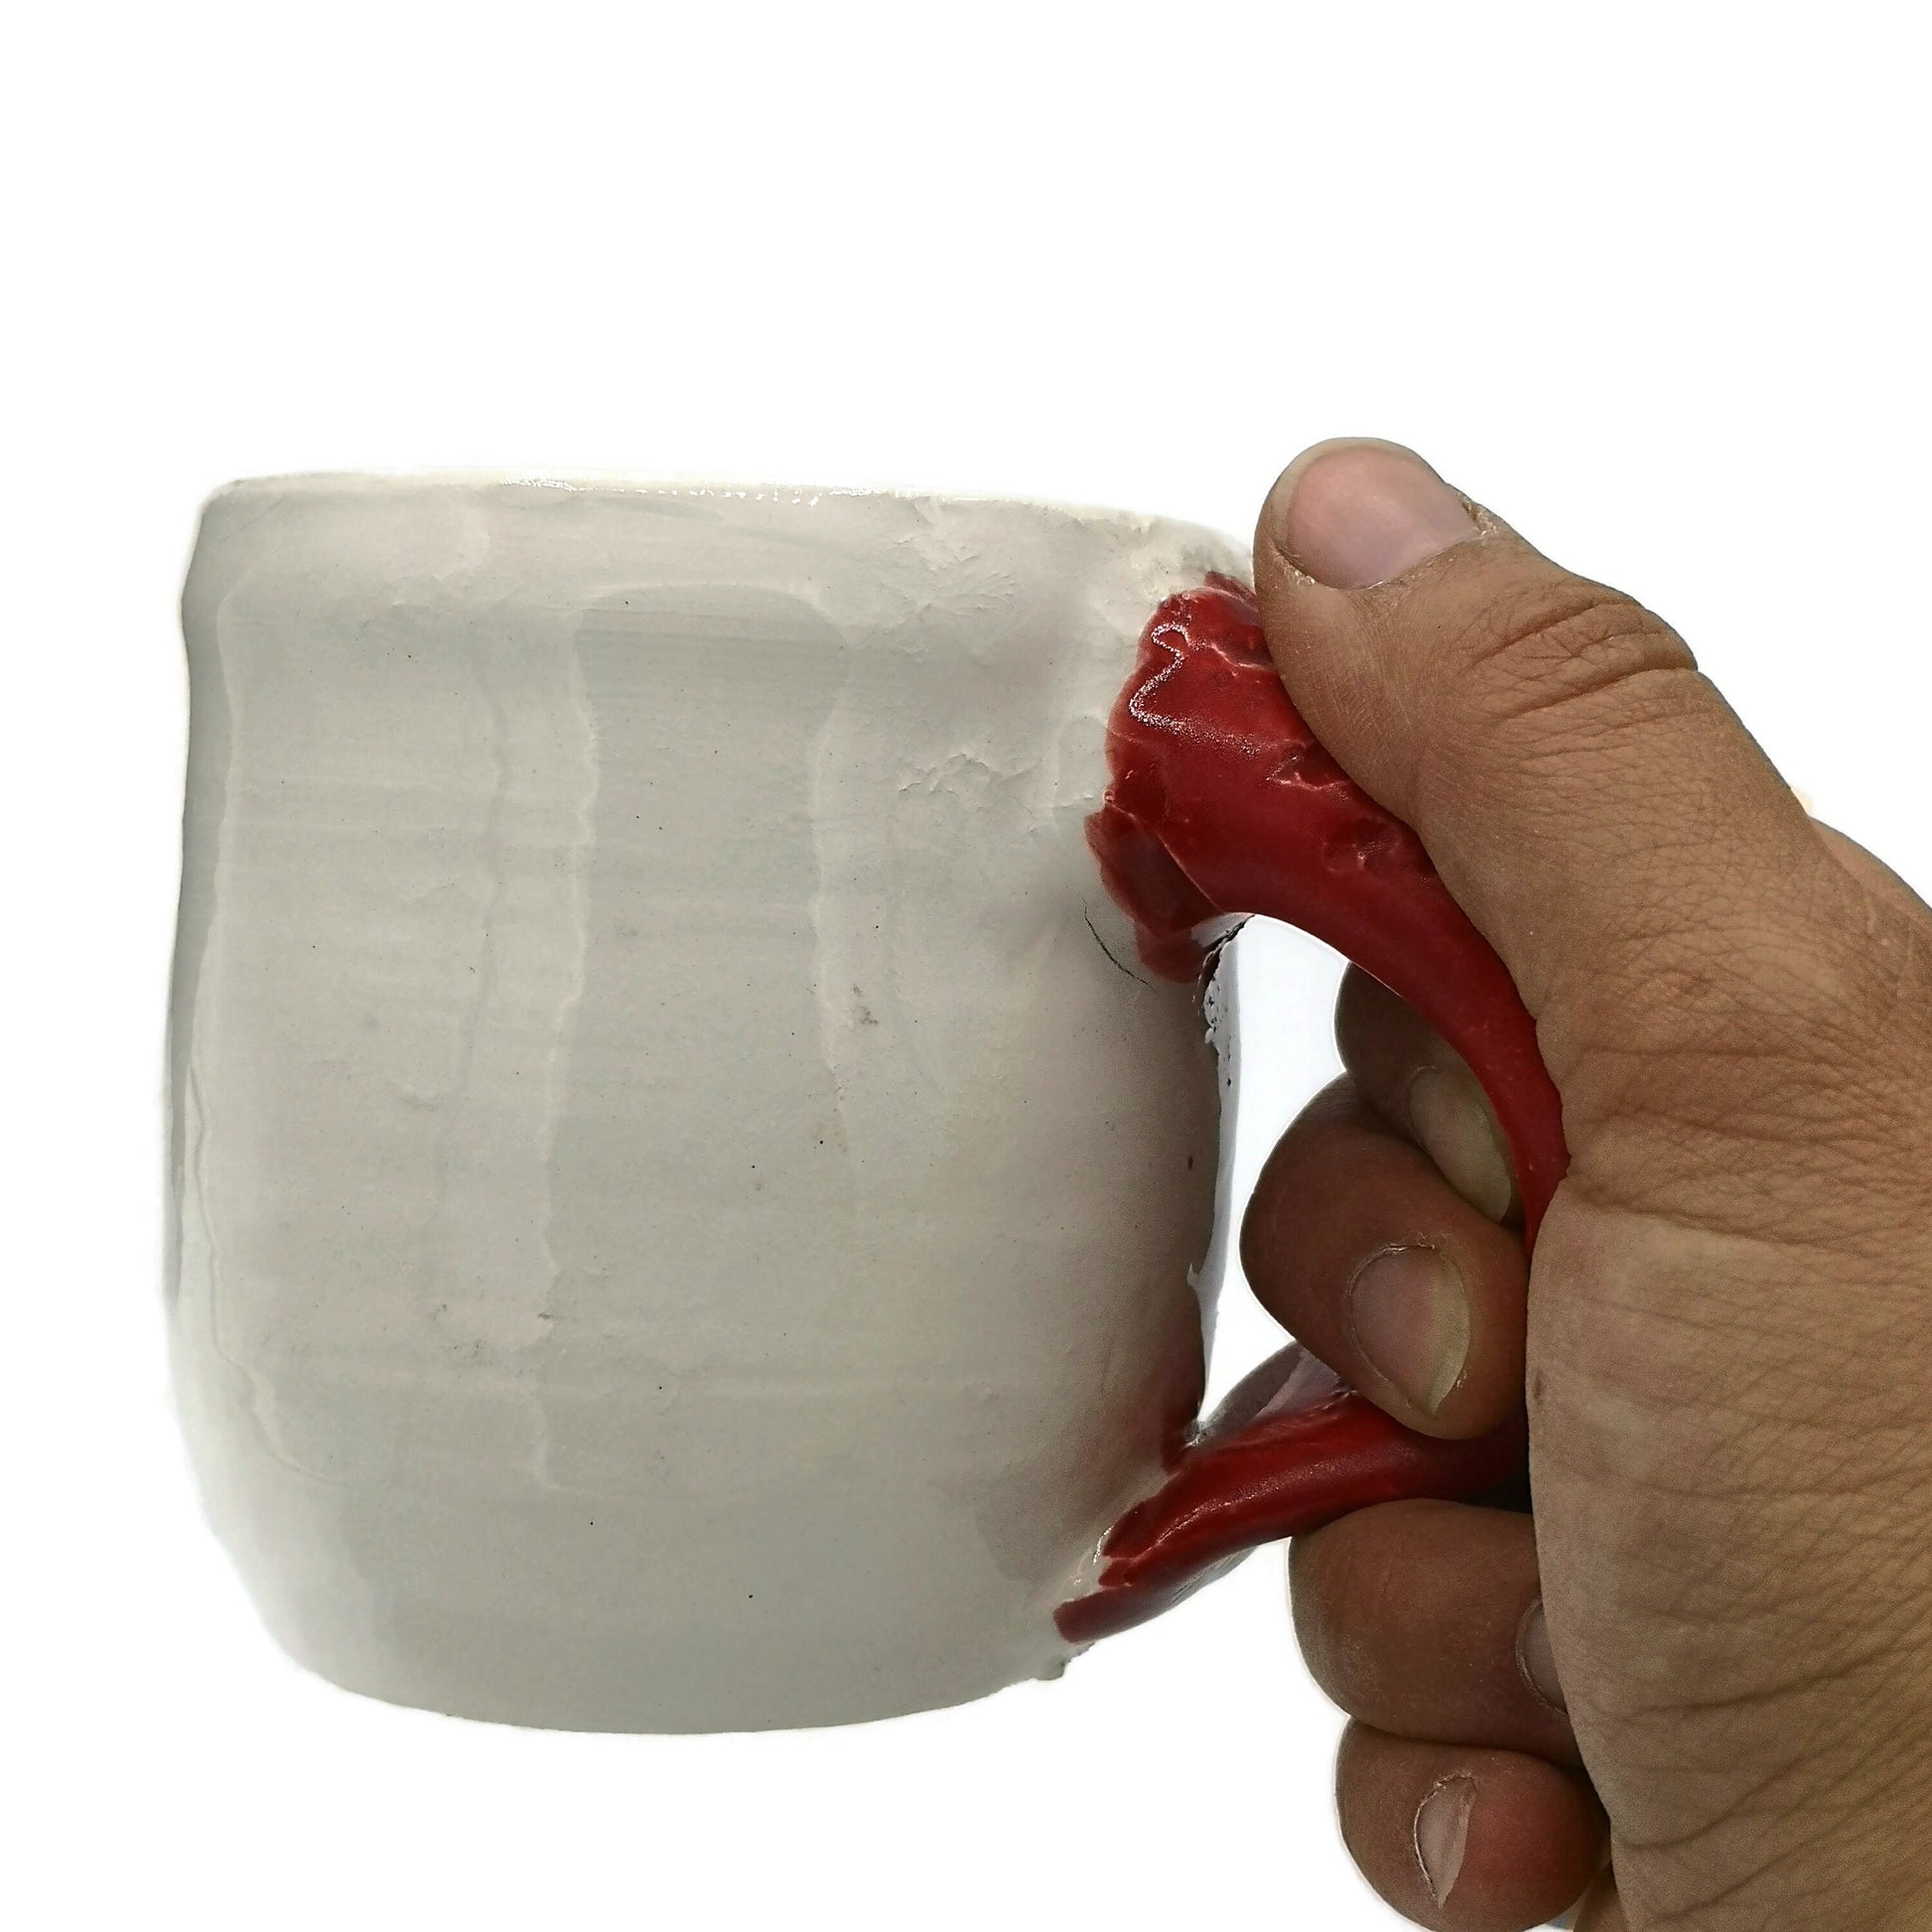 Handmade Ceramic Mug, Large Coffee Mug, Best Gifts For Him, Ceramic Mug Gift For Men, Mom Birthday Gift From Daughter, Handmade Pottery Mug - Ceramica Ana Rafael